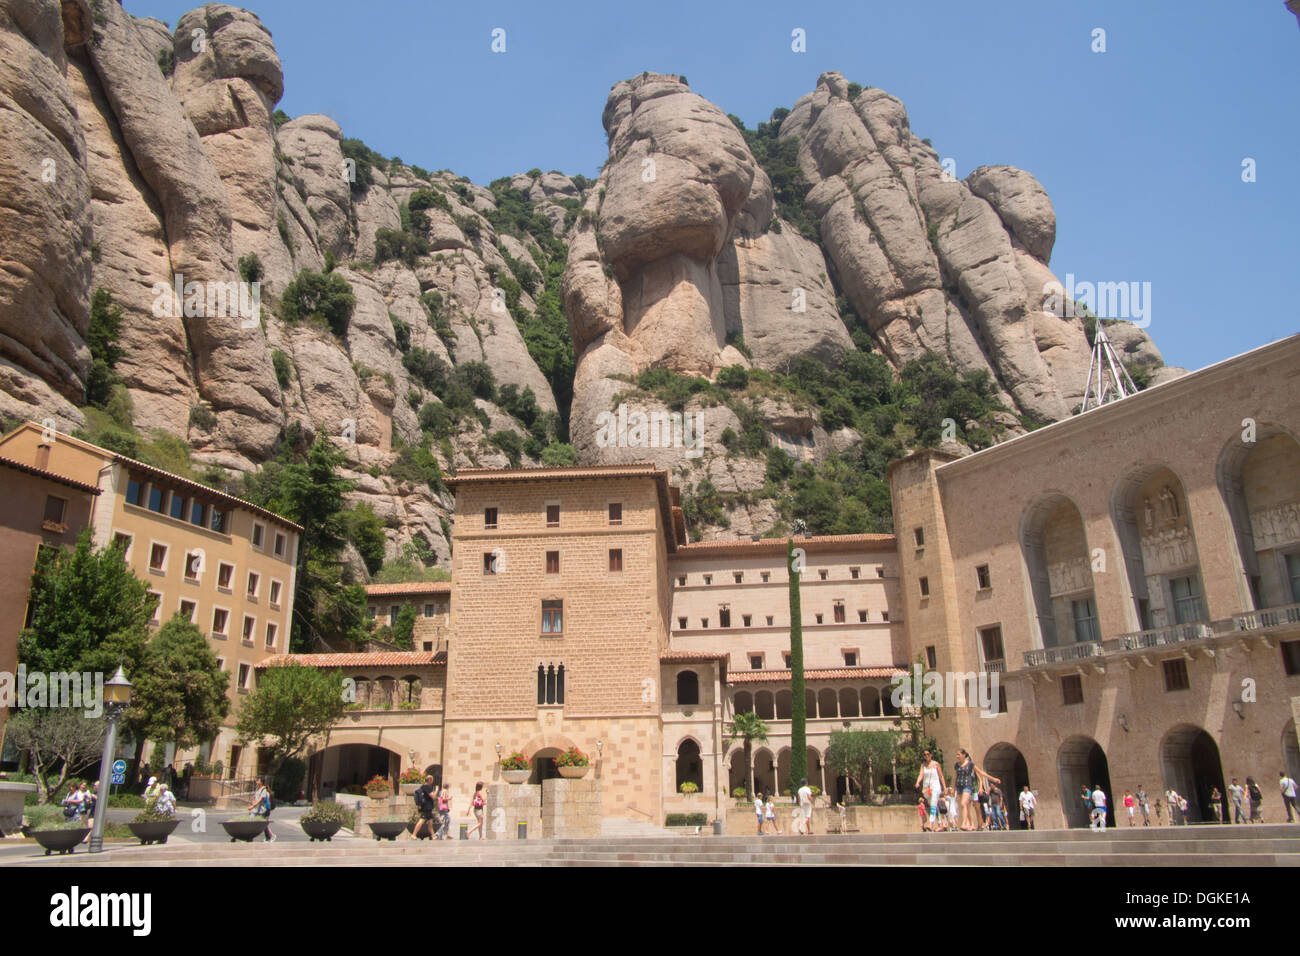 Montserrat mountain including the Benedictine Abbey 'Santa Maria de Montserrat', Catalonia, Spain. Stock Photo